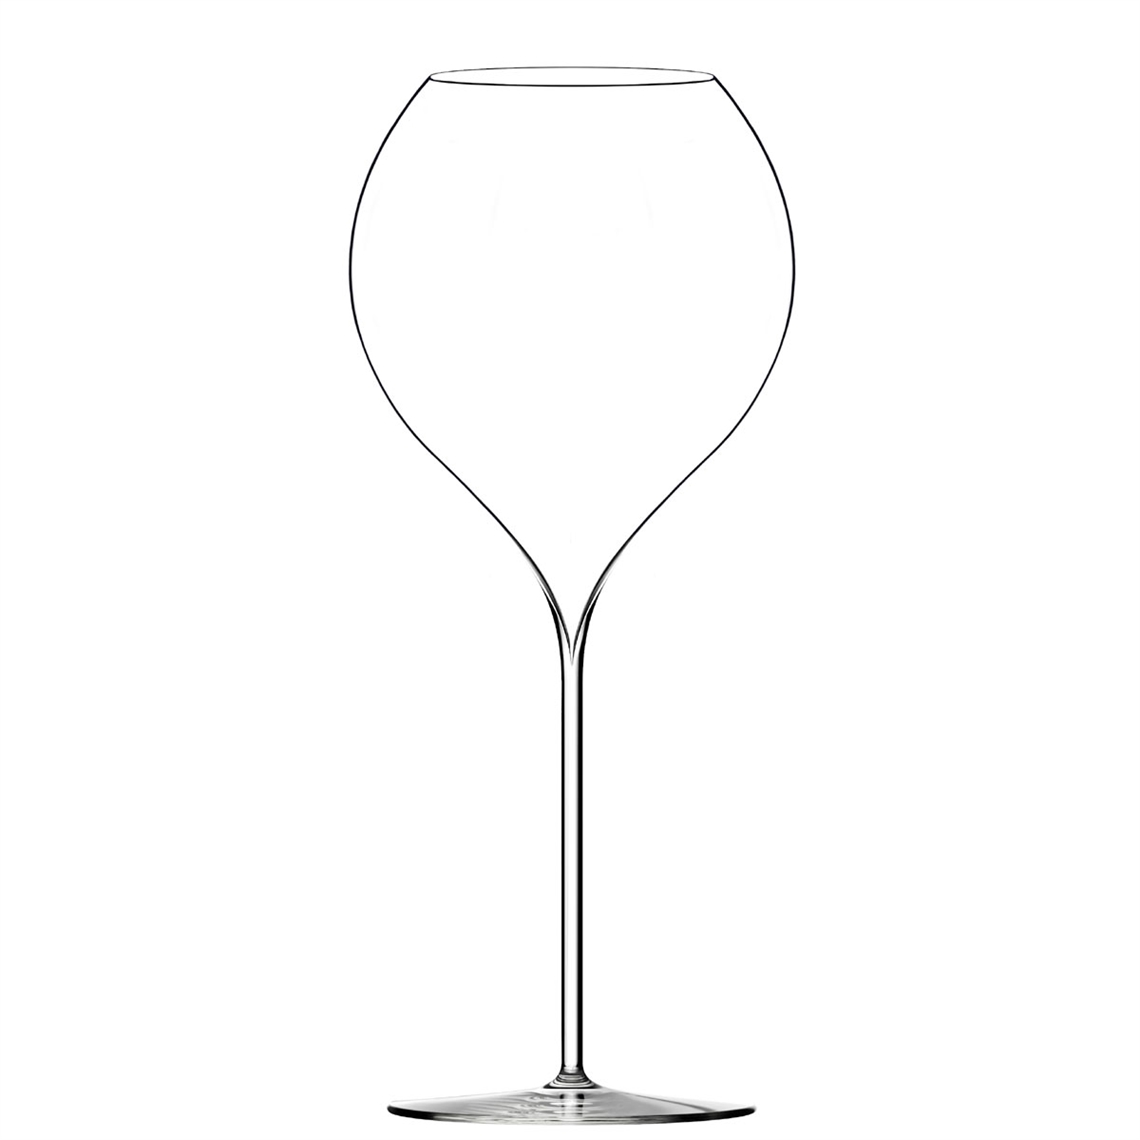 Lehmann Glass Jamesse Prestige Synergie 60 Red & White Wine Glass 600ml - Set of 6